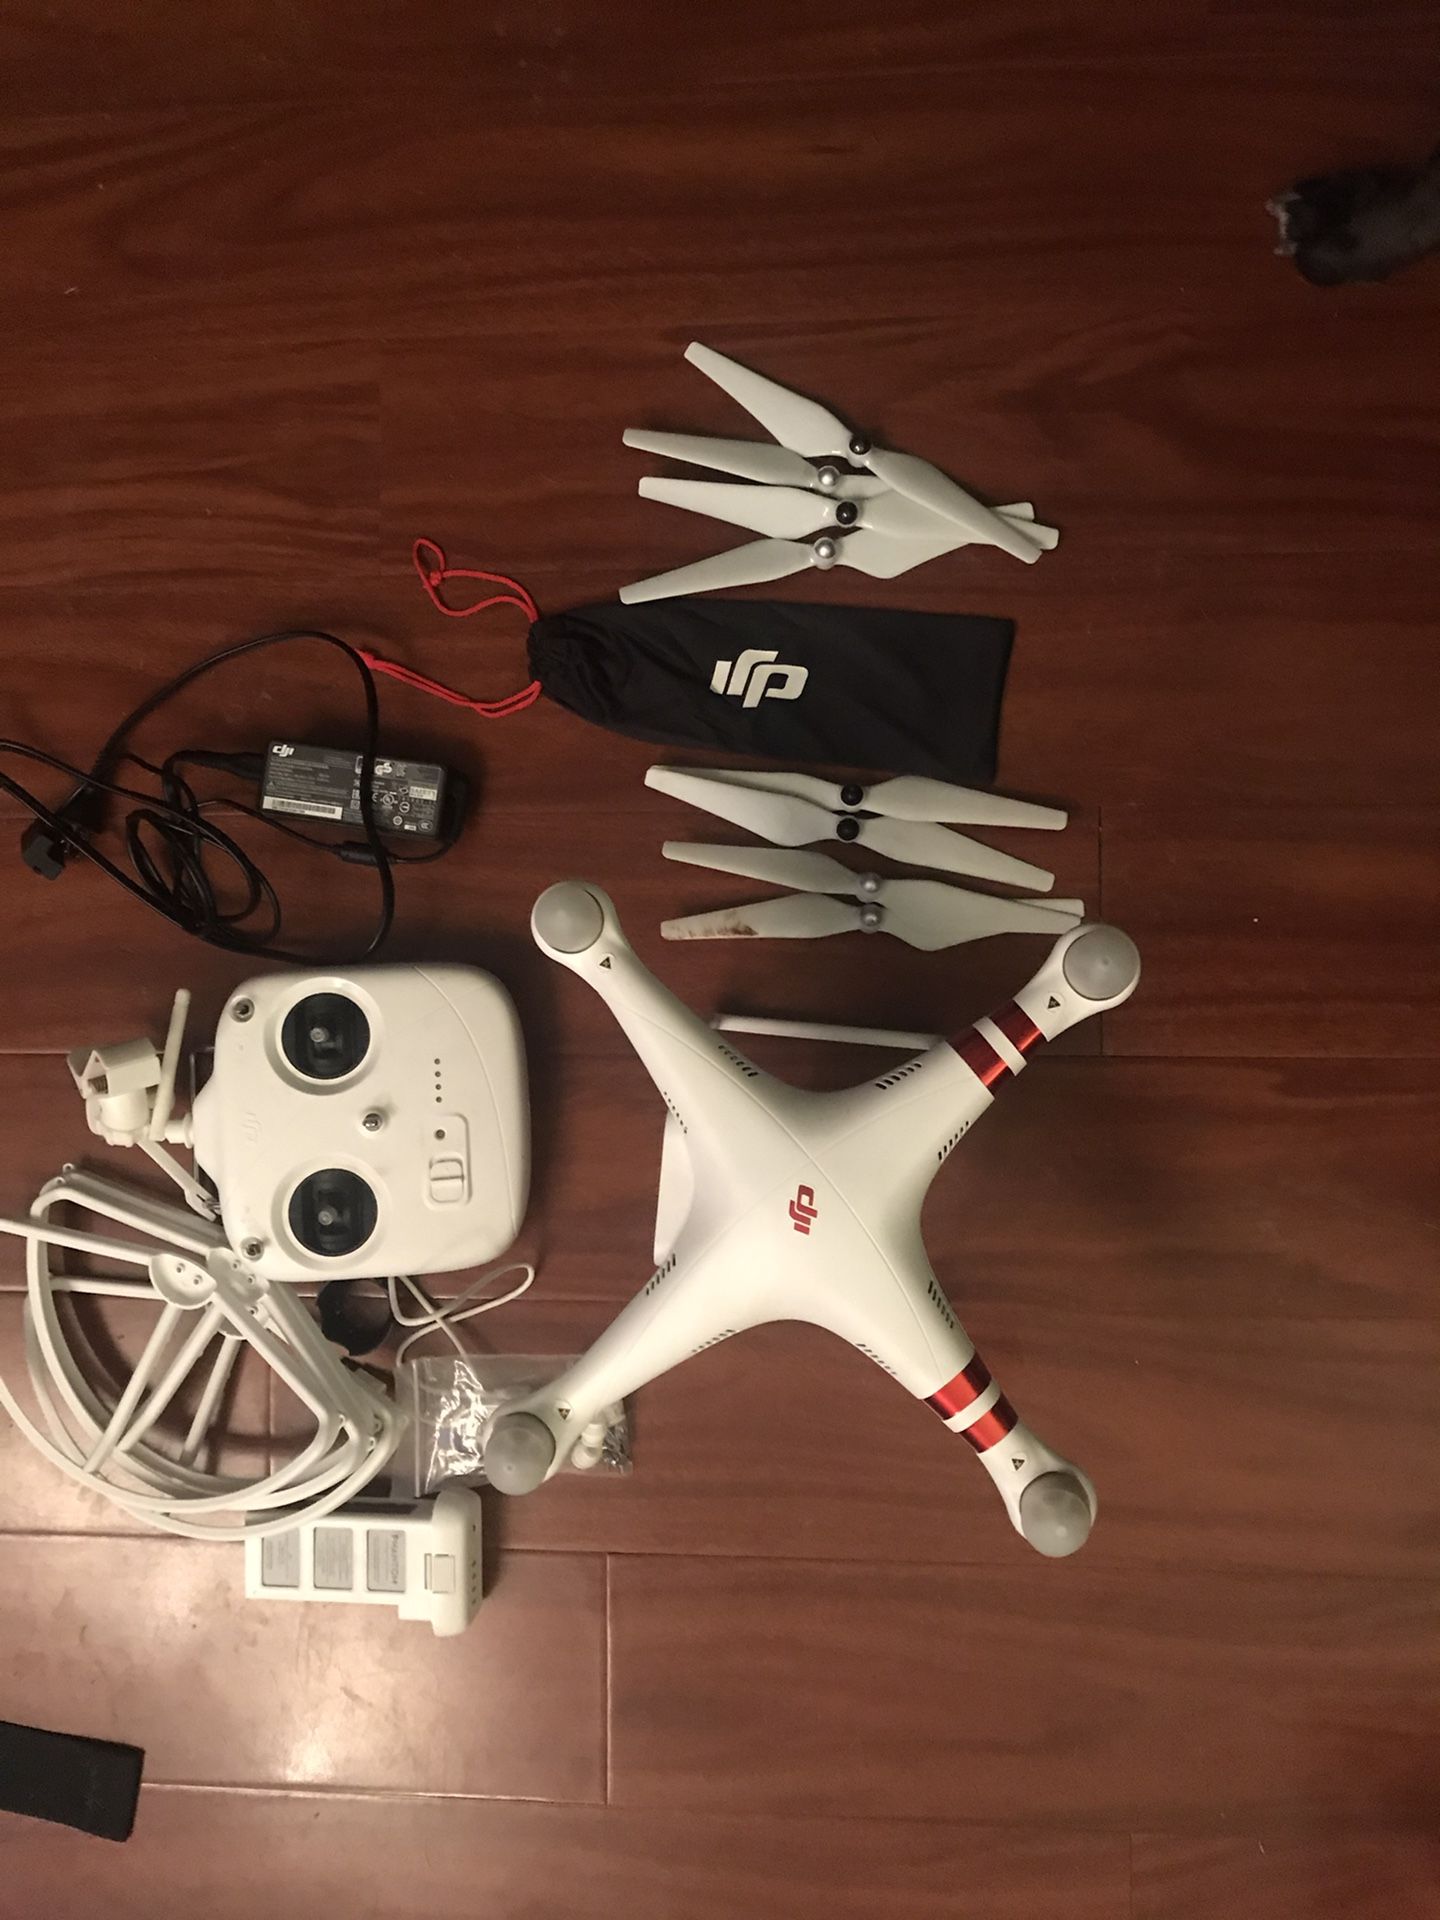 Dji phantom 3 drone with Accessories